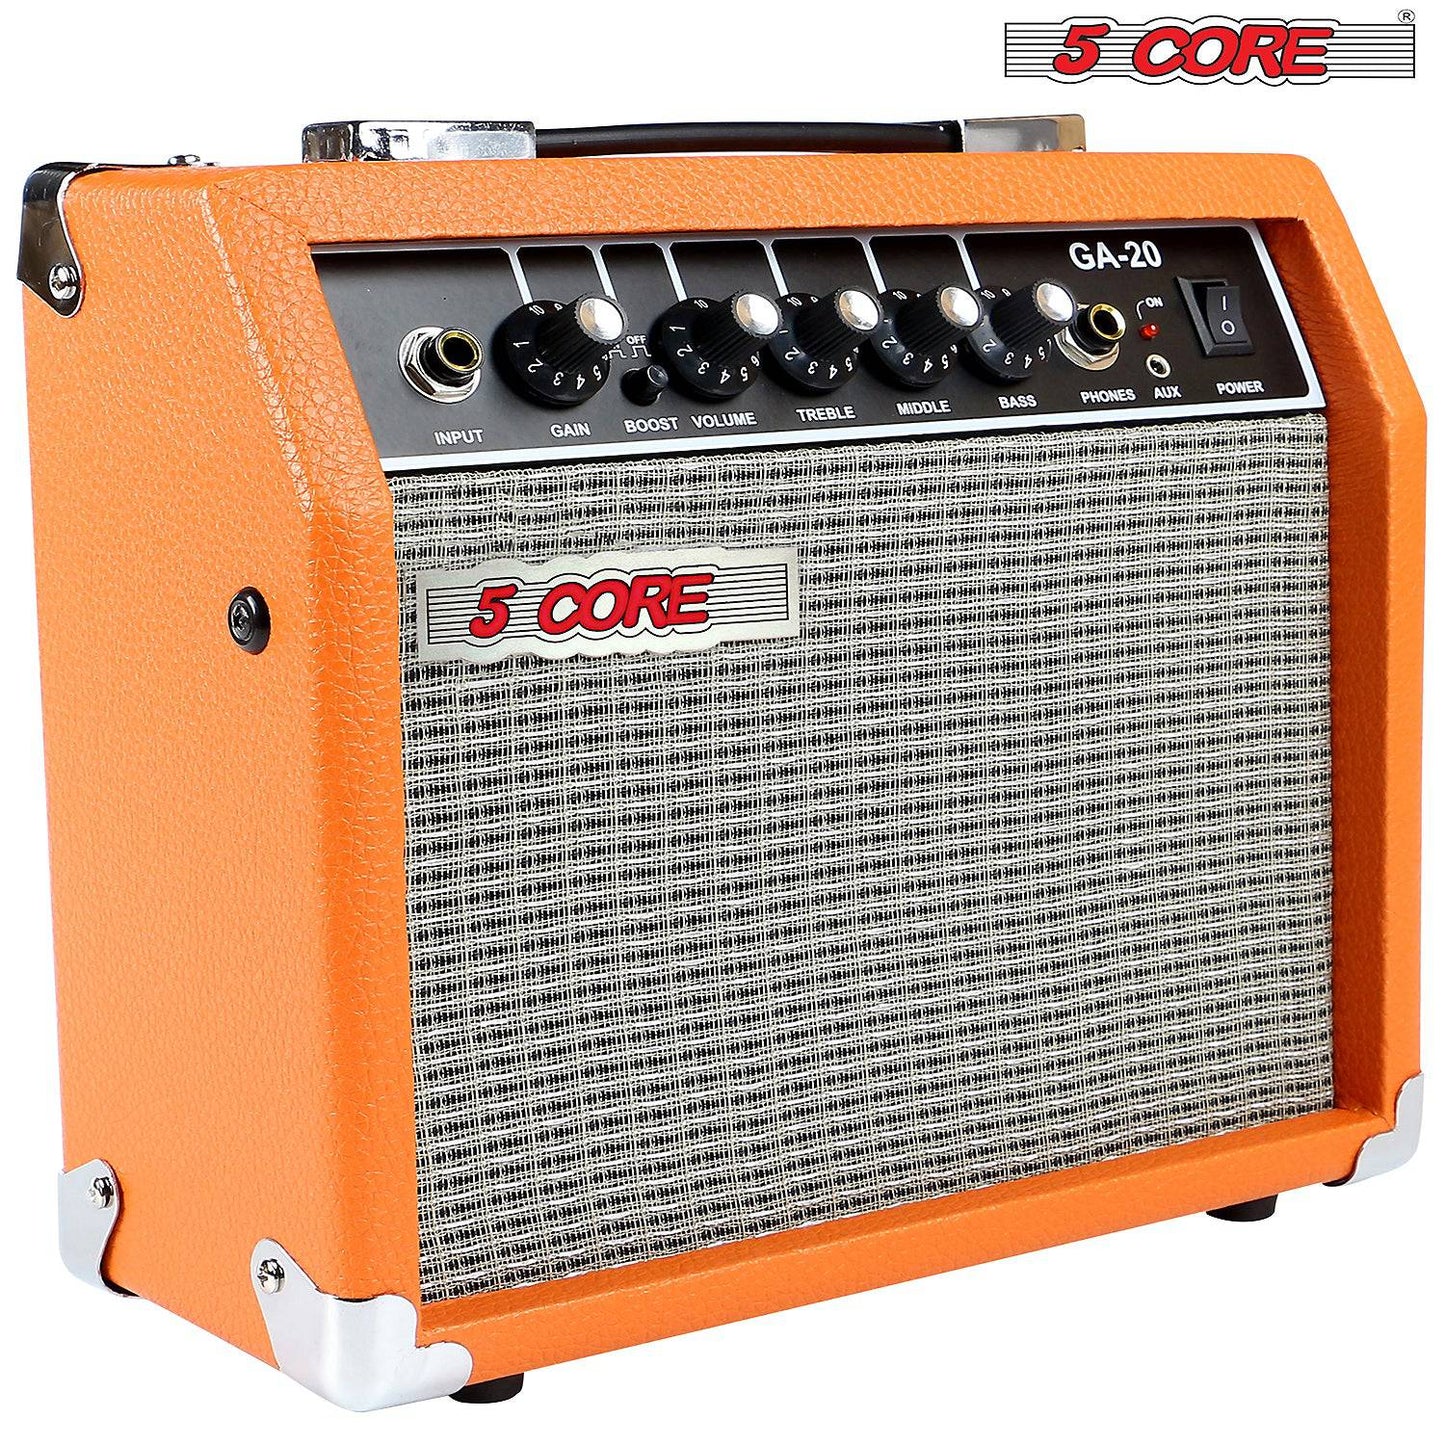 5Core 20 Watt Electric Guitar Bass Amp Amplifier Built In Speaker Headphone Jack & AUX GA 20 ORG